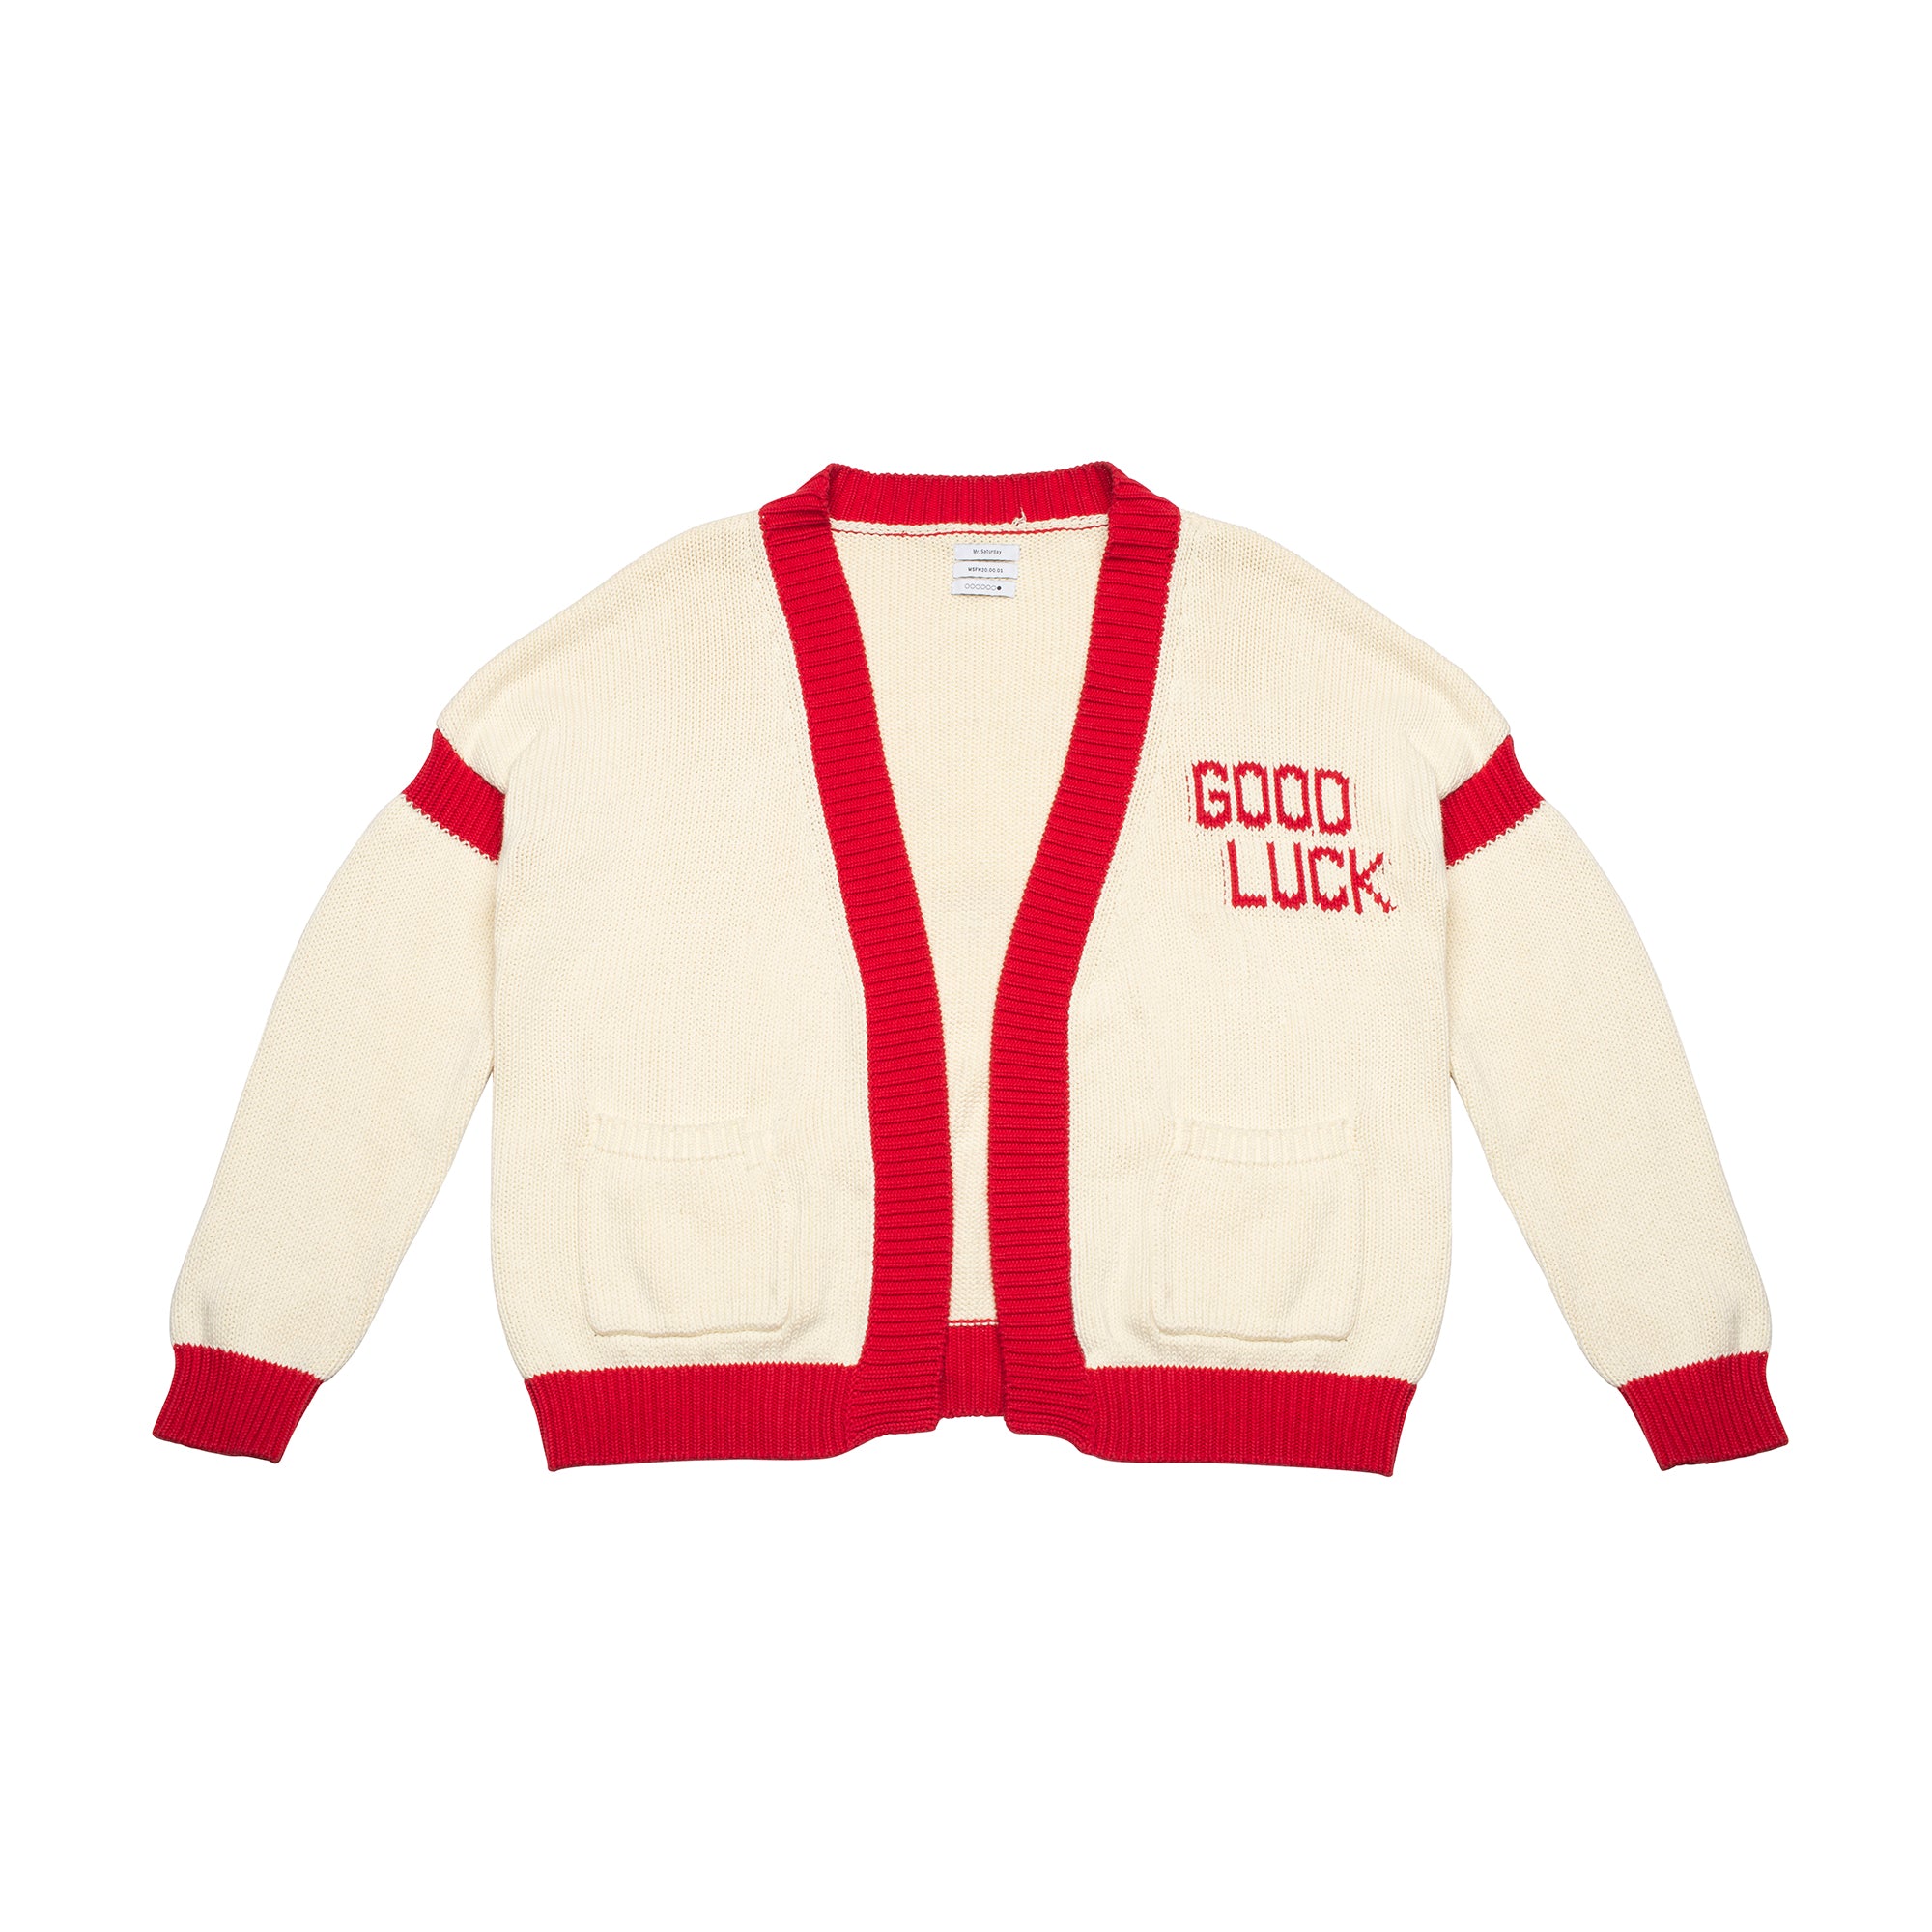 MSFW20.15.01 Good Luck Cardigan - Cream/Red